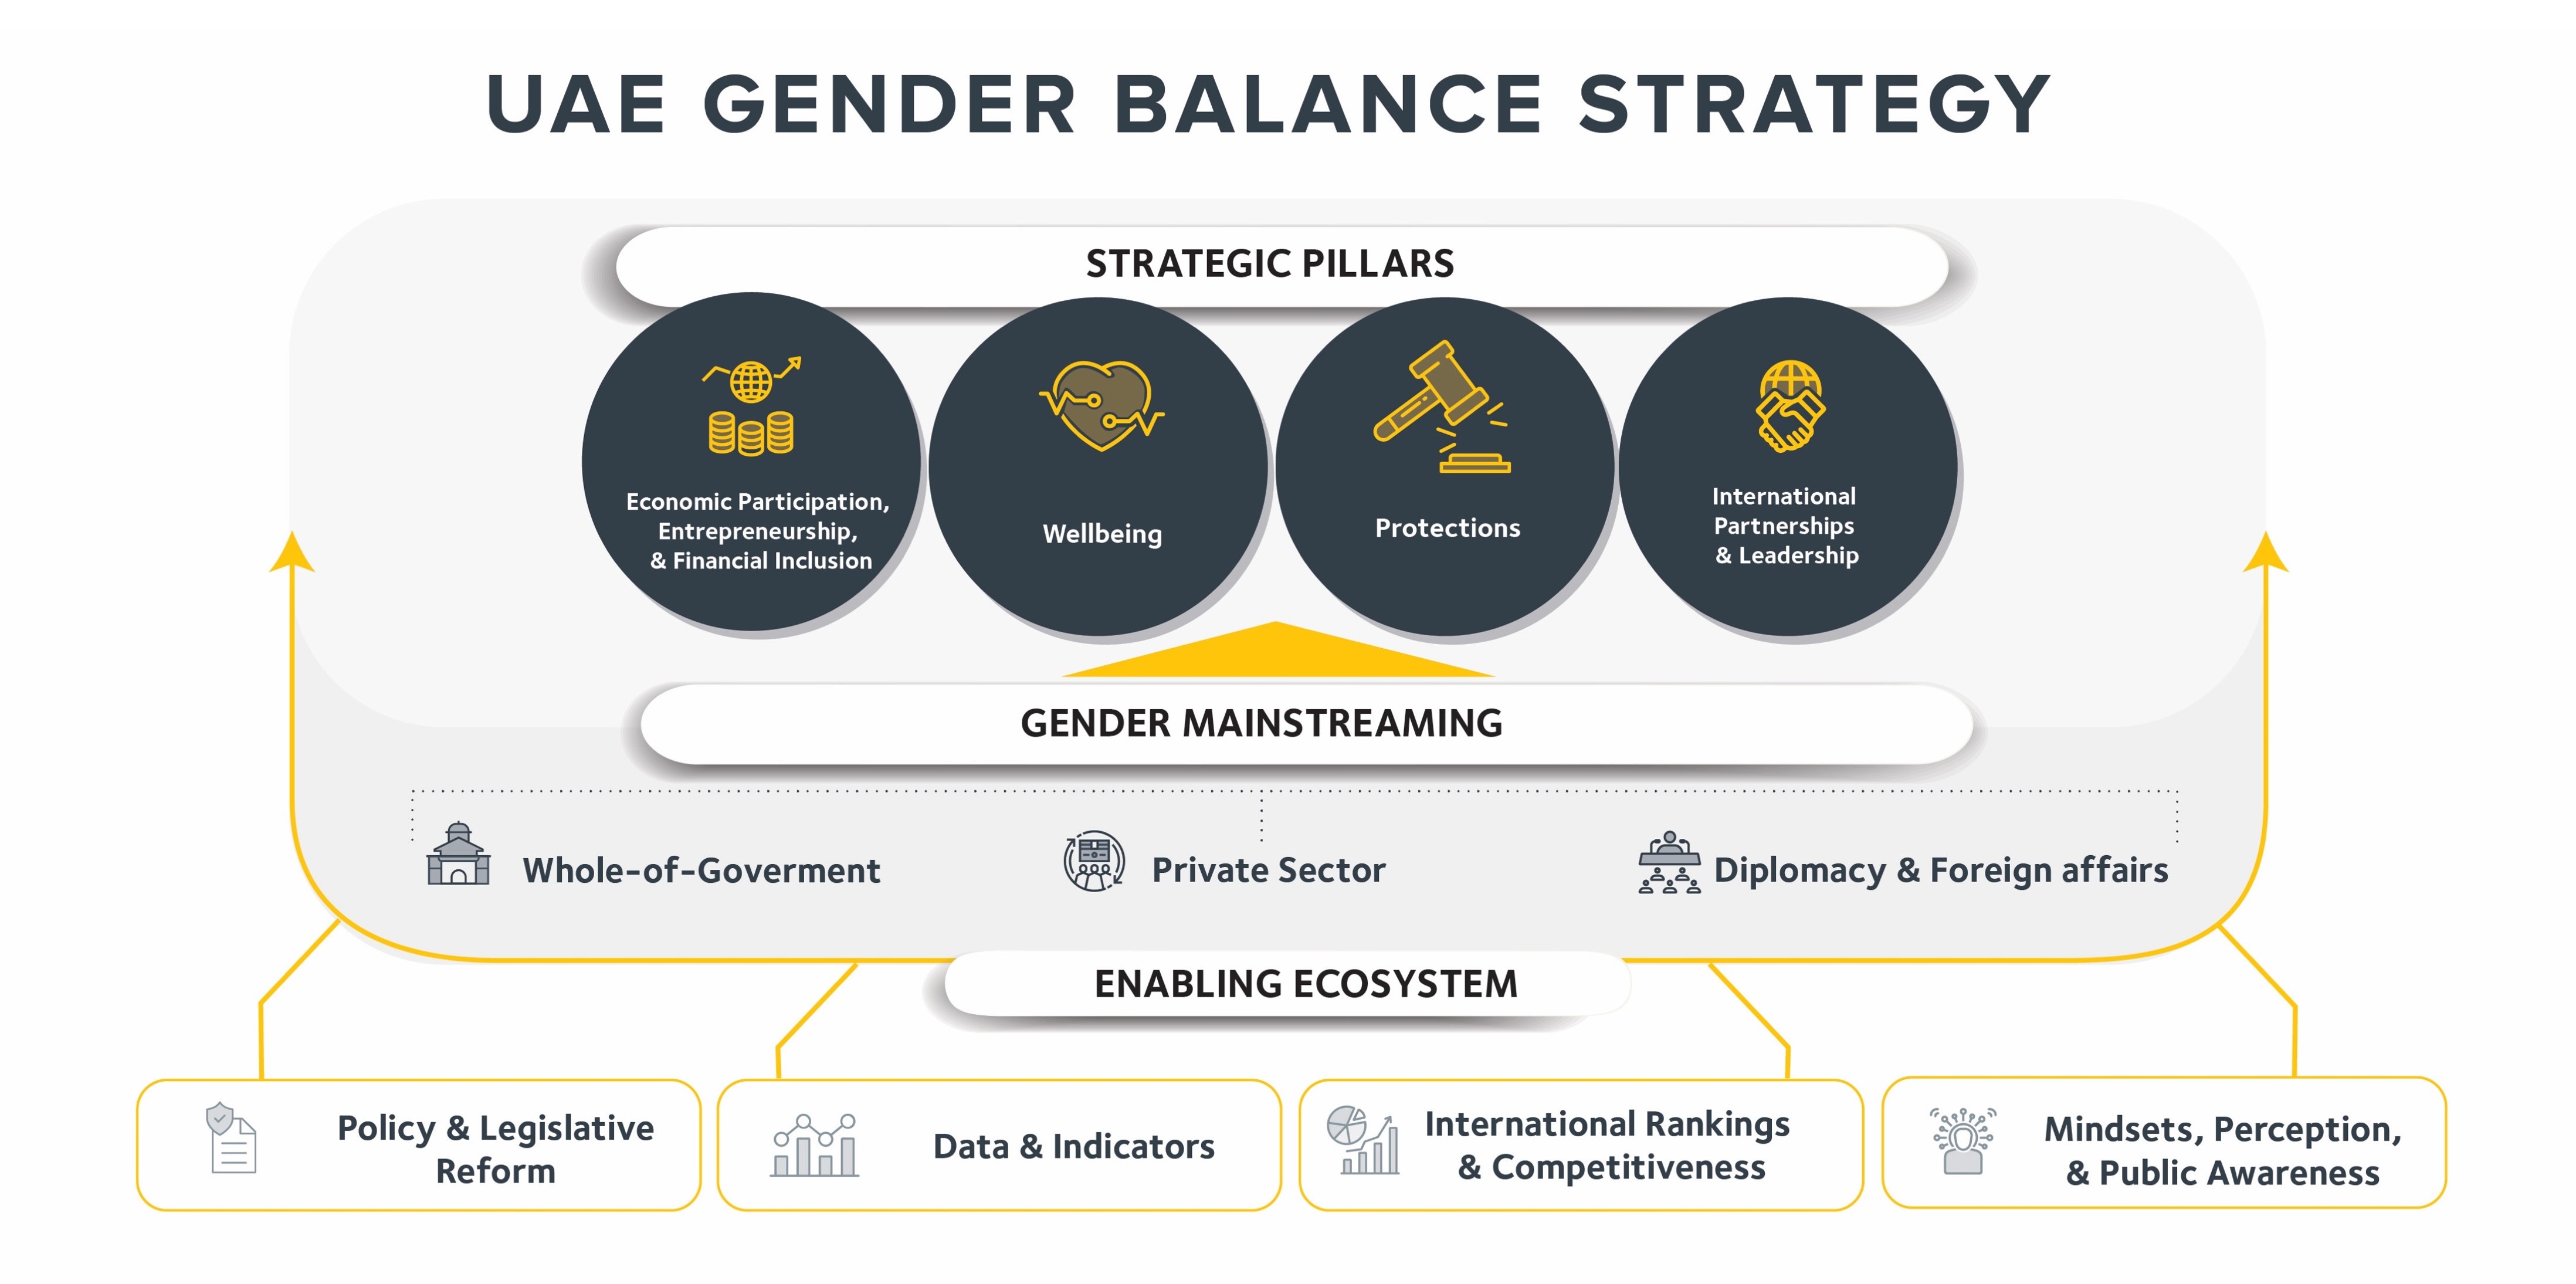 UAE Gender Balance Council Strategy pillars